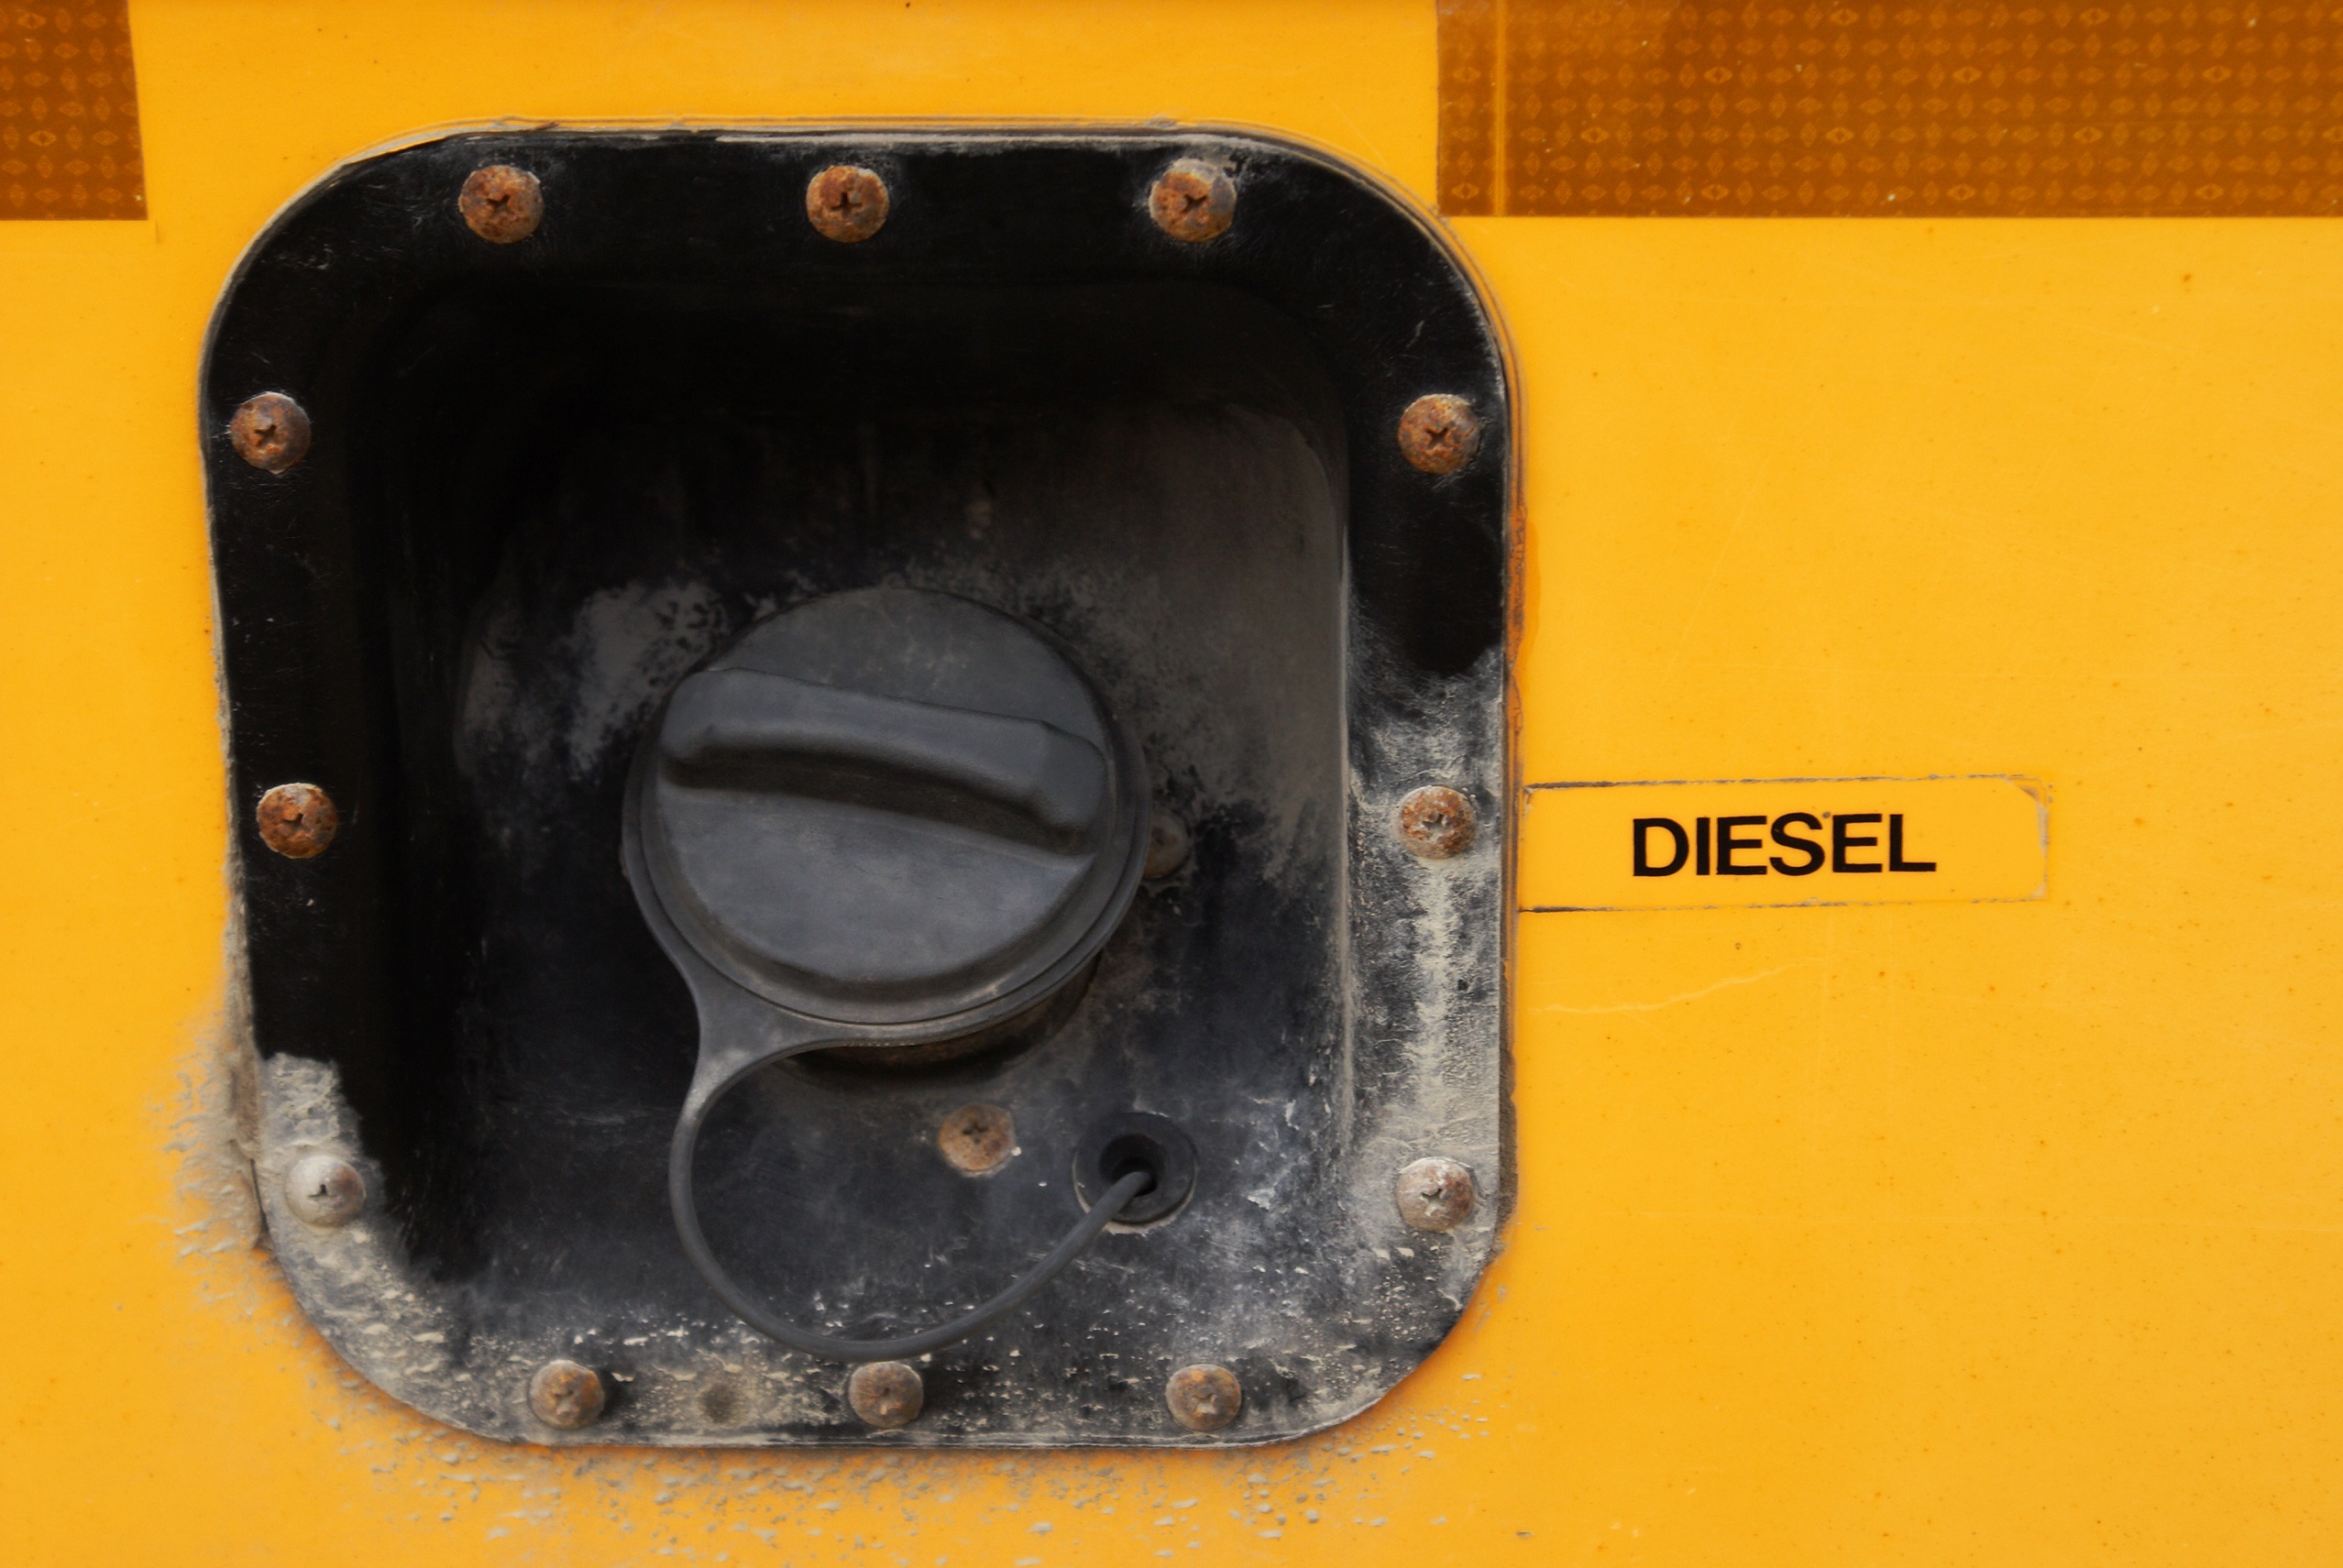 Bulk diesel average price drops in November 2022, RHA figures show